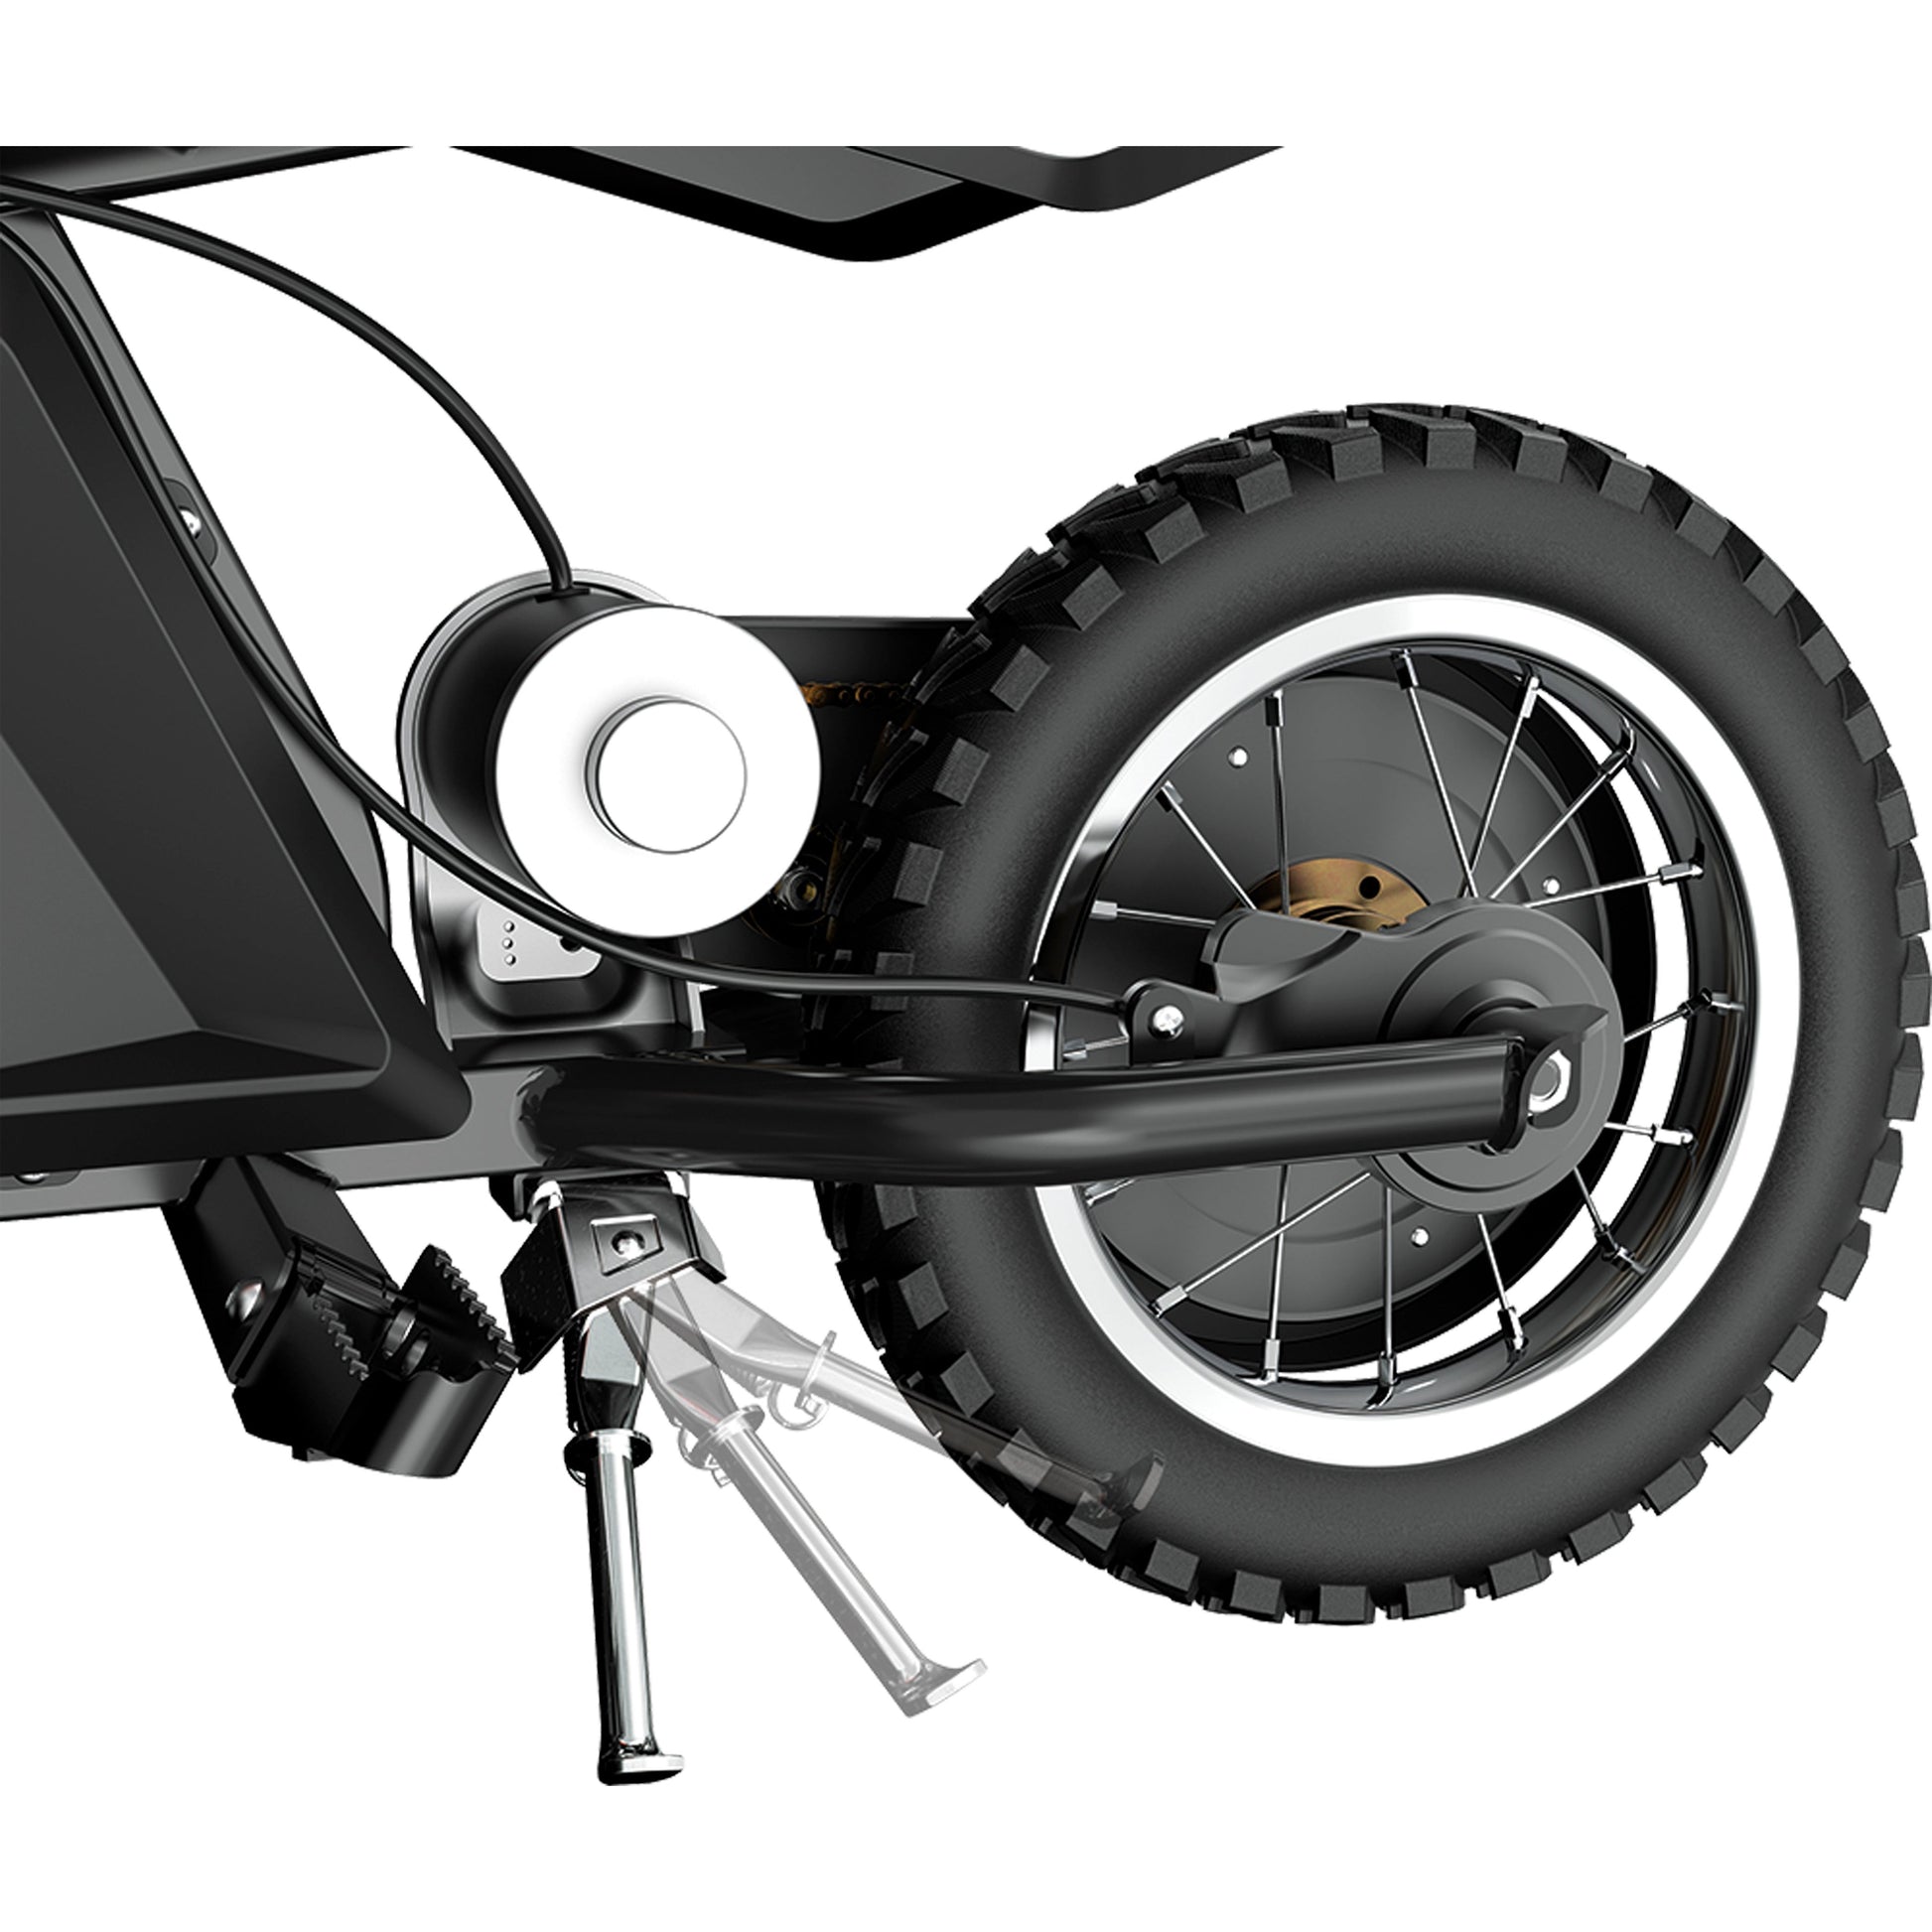 Razor Dirt Rocket MX125 - Black motor and back wheel close up